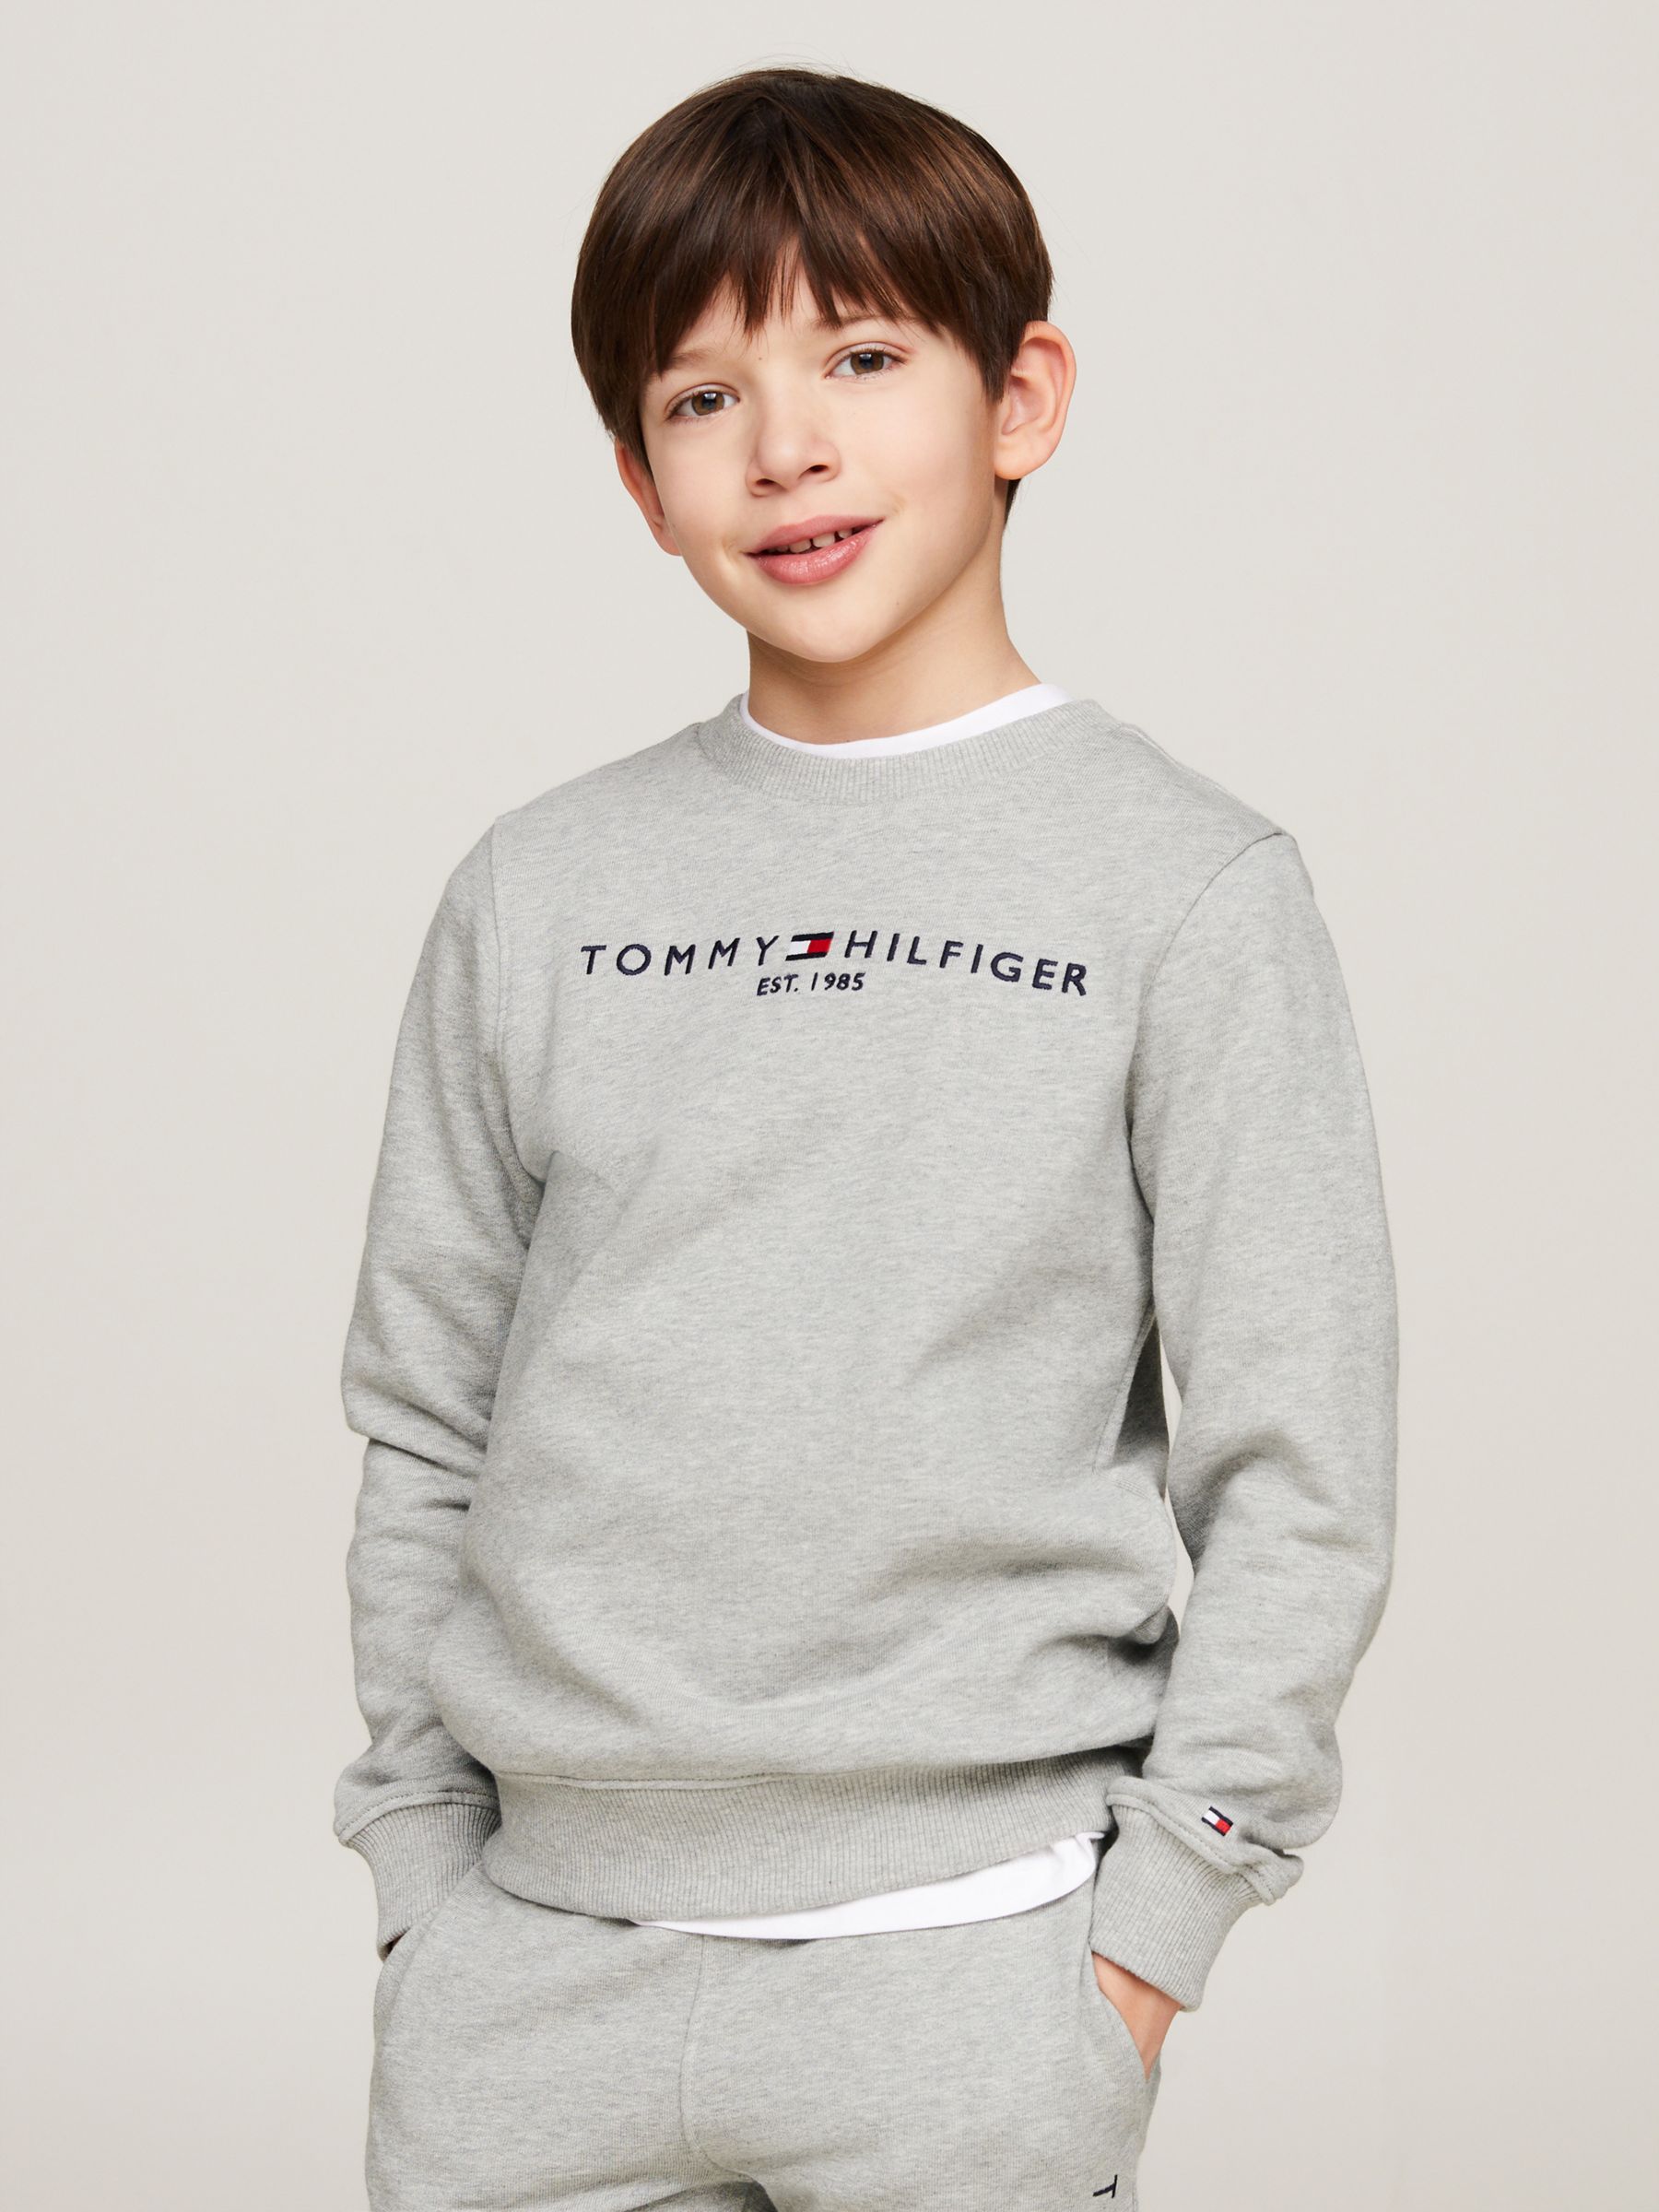 consonant Current overlook Tommy Hilfiger Kids' Essential Organic Cotton Logo Sweatshirt, Light Grey  Heather at John Lewis & Partners